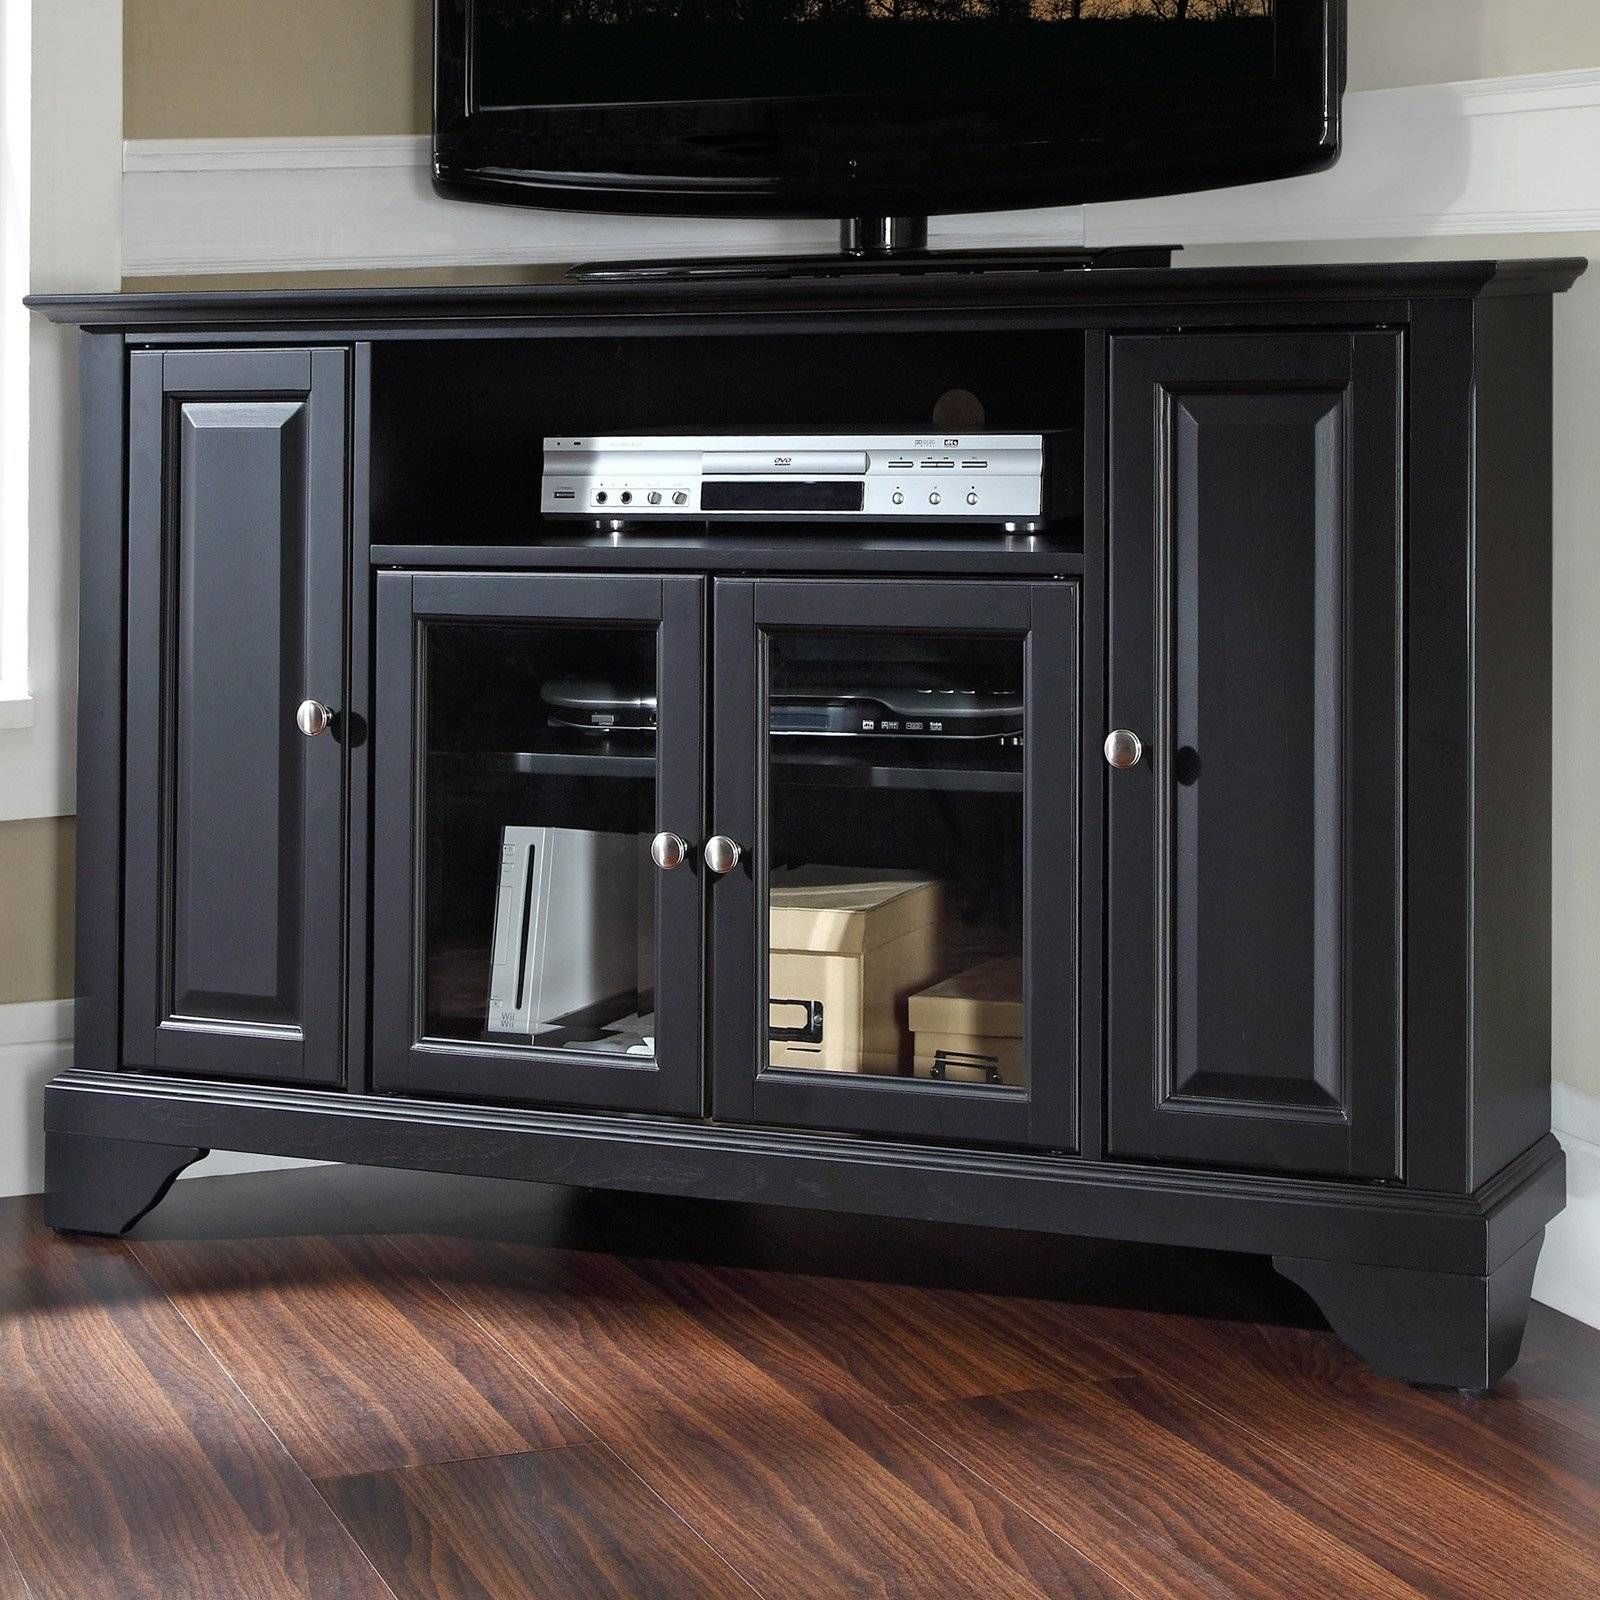 Charmful Sauder Black Tv Stand Sauder Tv Stand Black Home Design With Black Wood Corner Tv Stands (View 11 of 15)